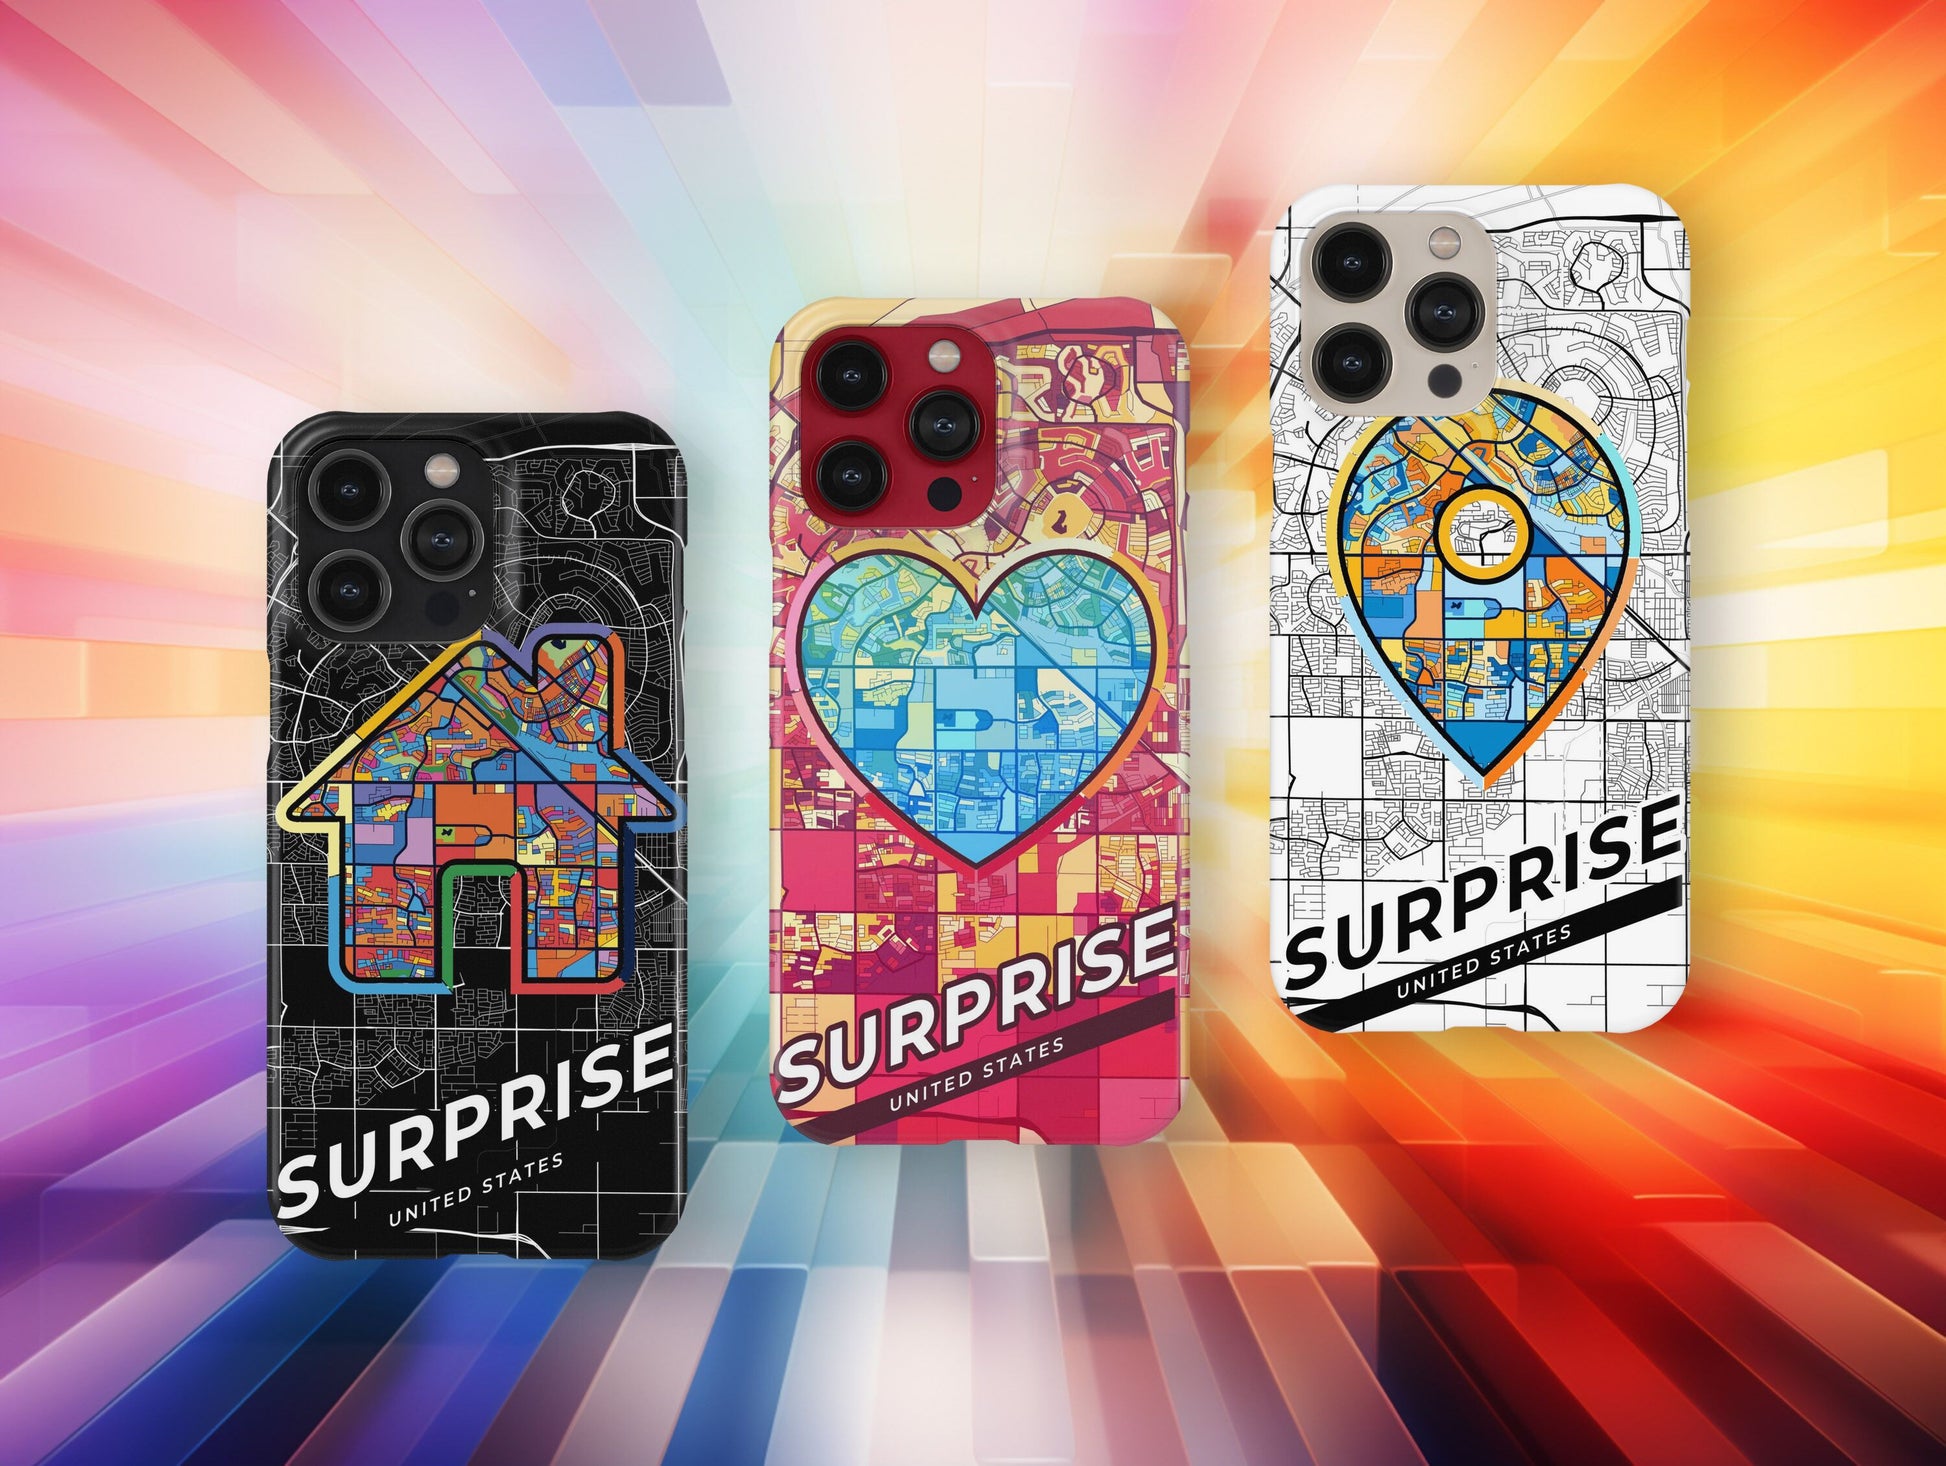 Surprise Arizona slim phone case with colorful icon